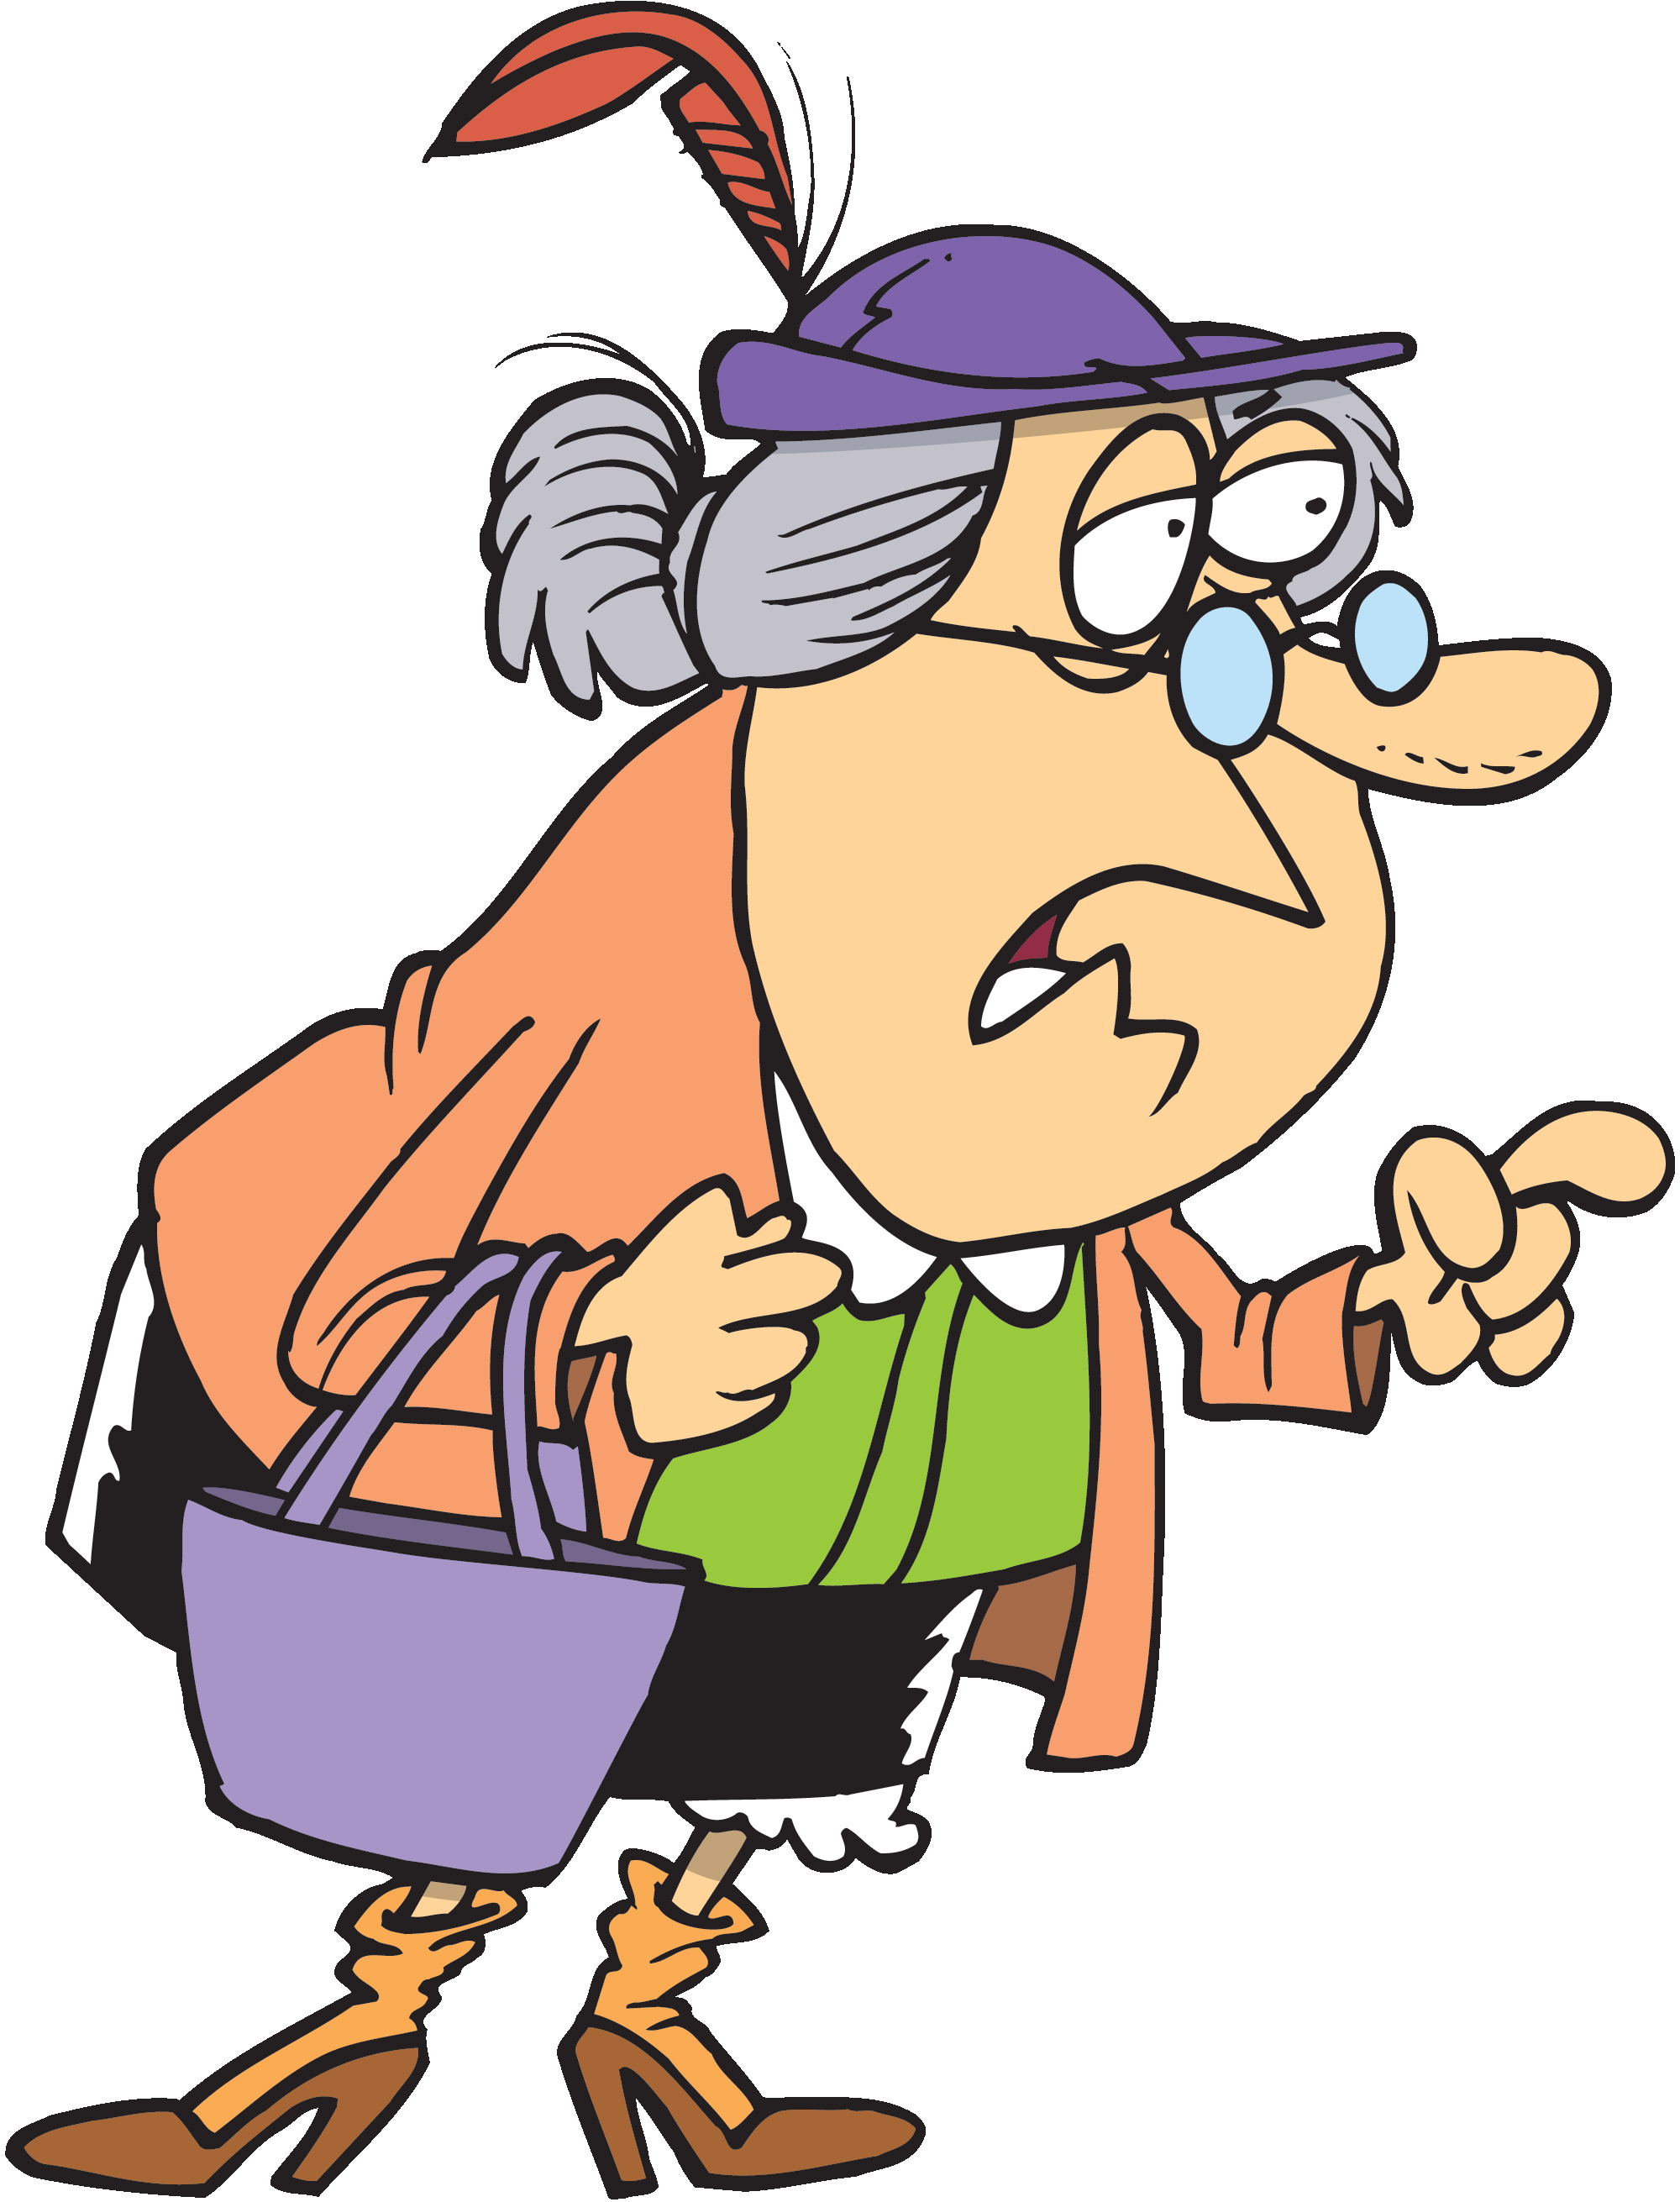 Old Ladies Cartoon Images : Old Lady Cartoon Ladies Woman Wiki Time ...